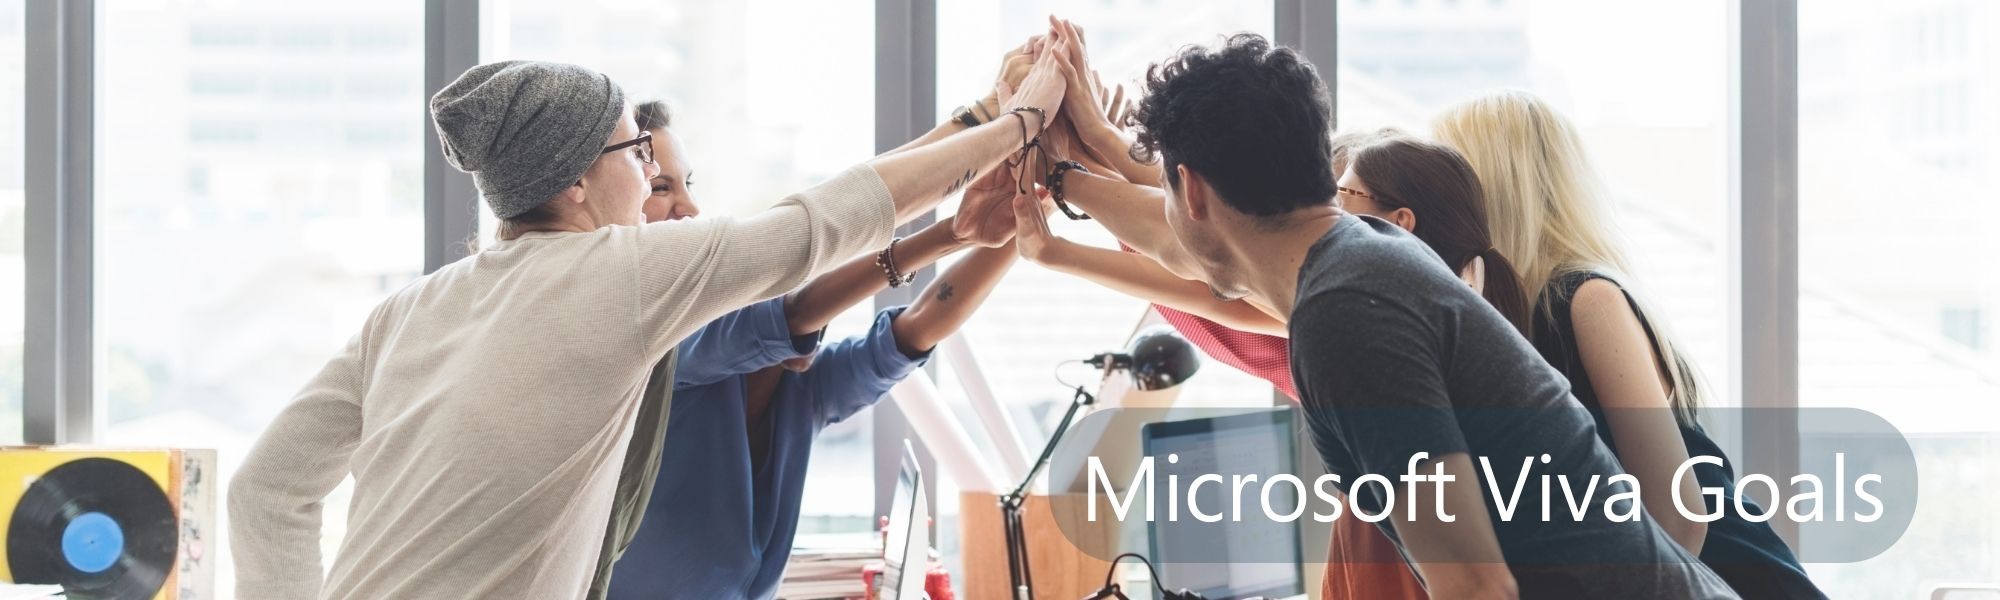 Microsoft Viva Goals  CompanyNet